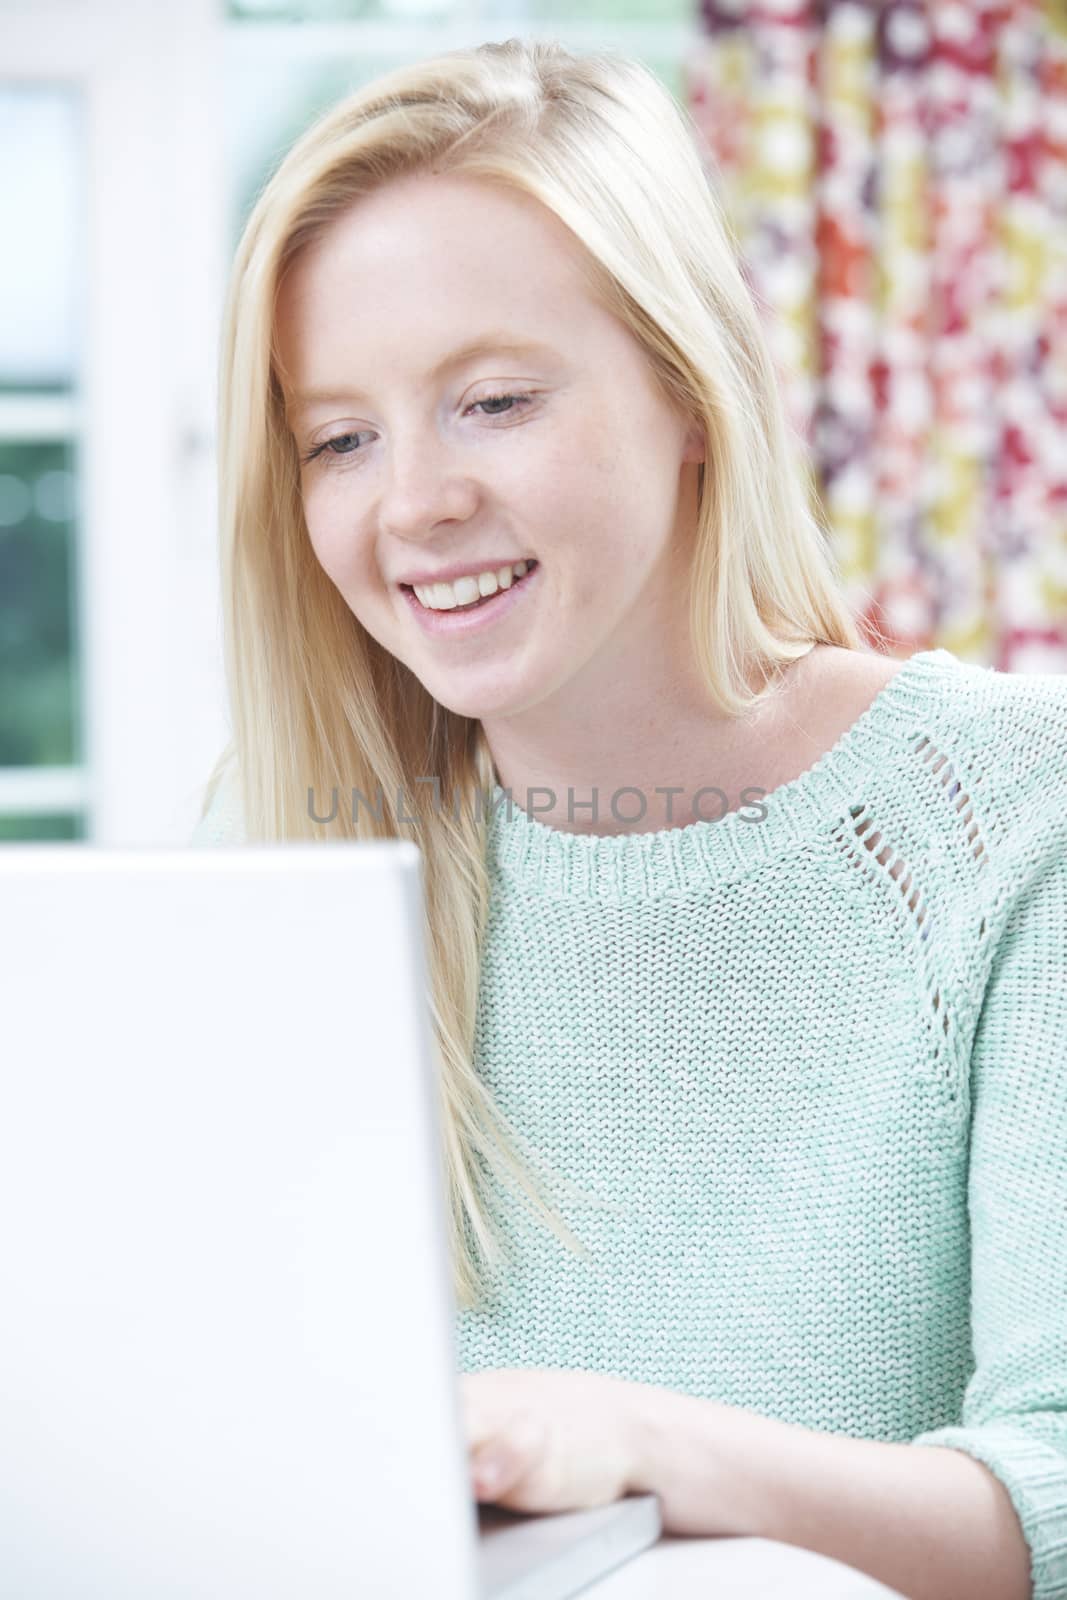 Teenage Girl Using Computer At Home